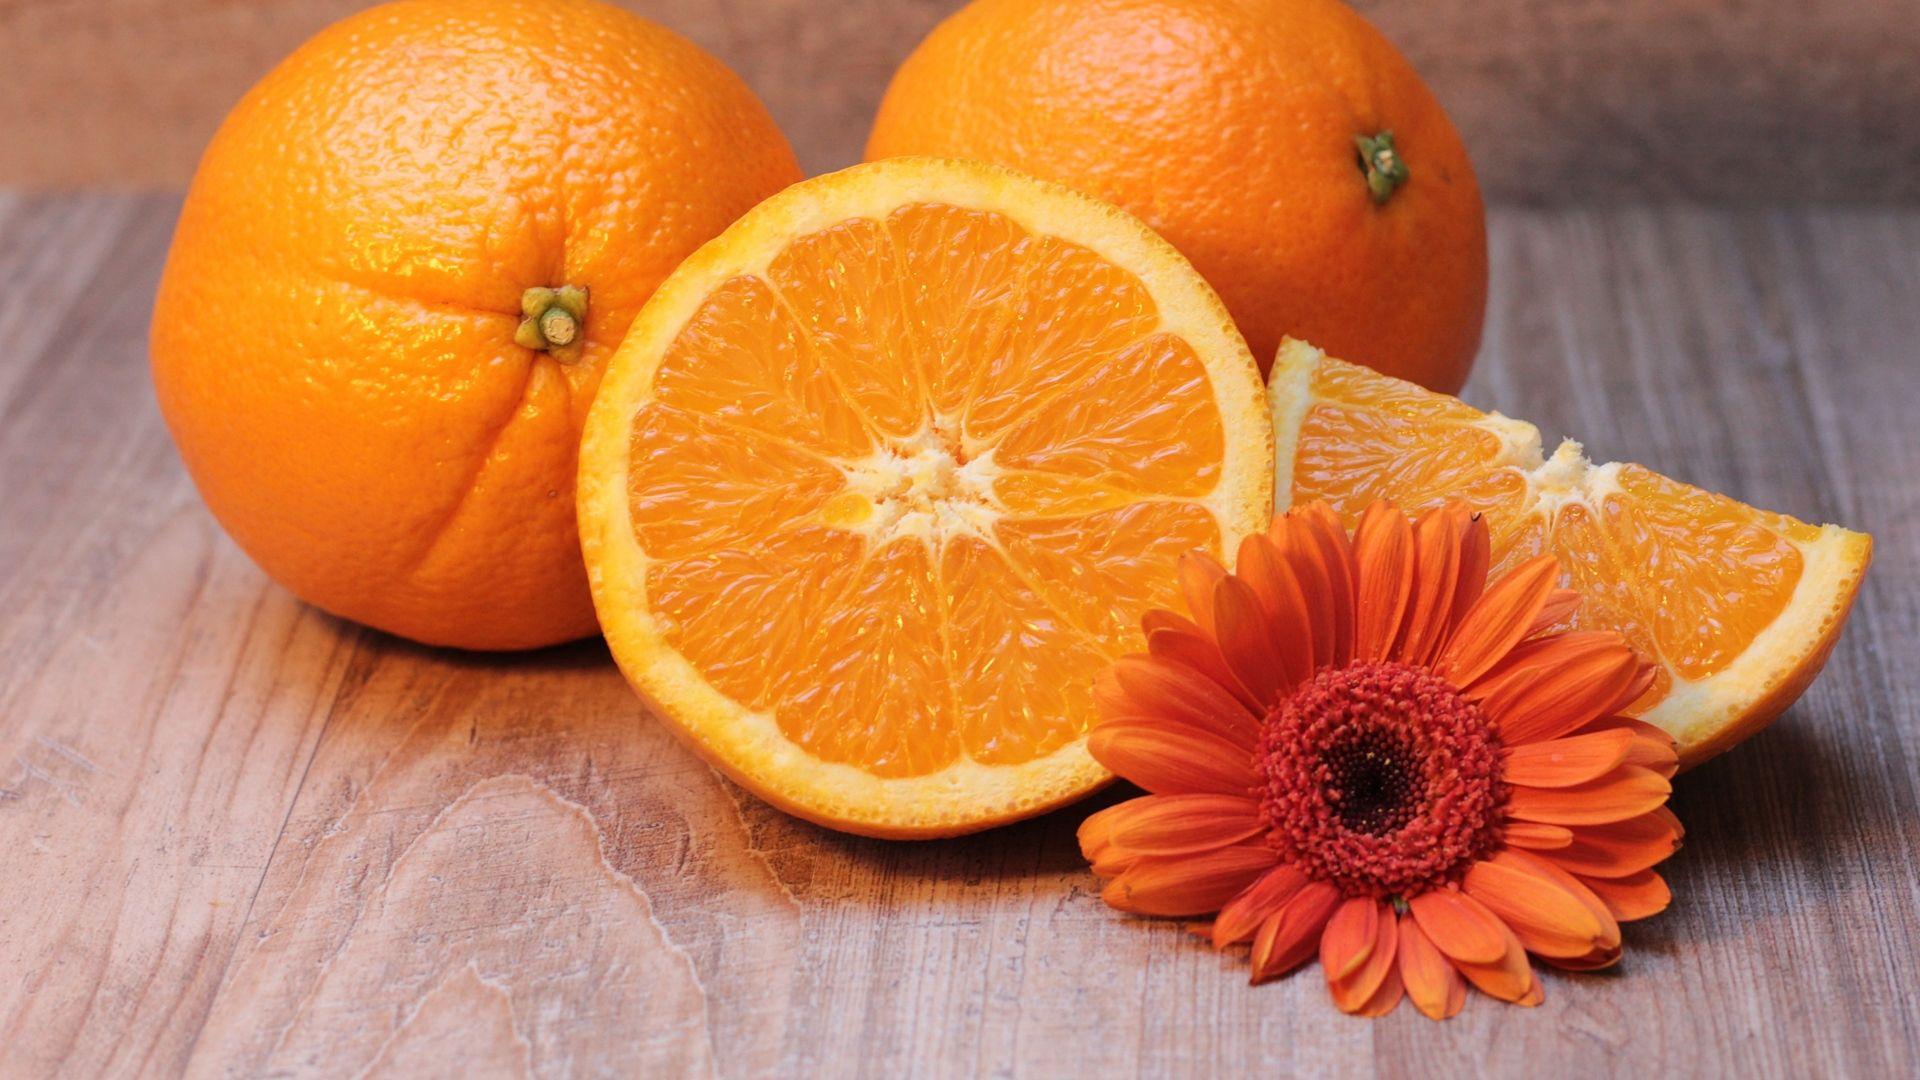 Download Wallpaper 1920x1080 Oranges, Fruit, Citrus, Flower Full